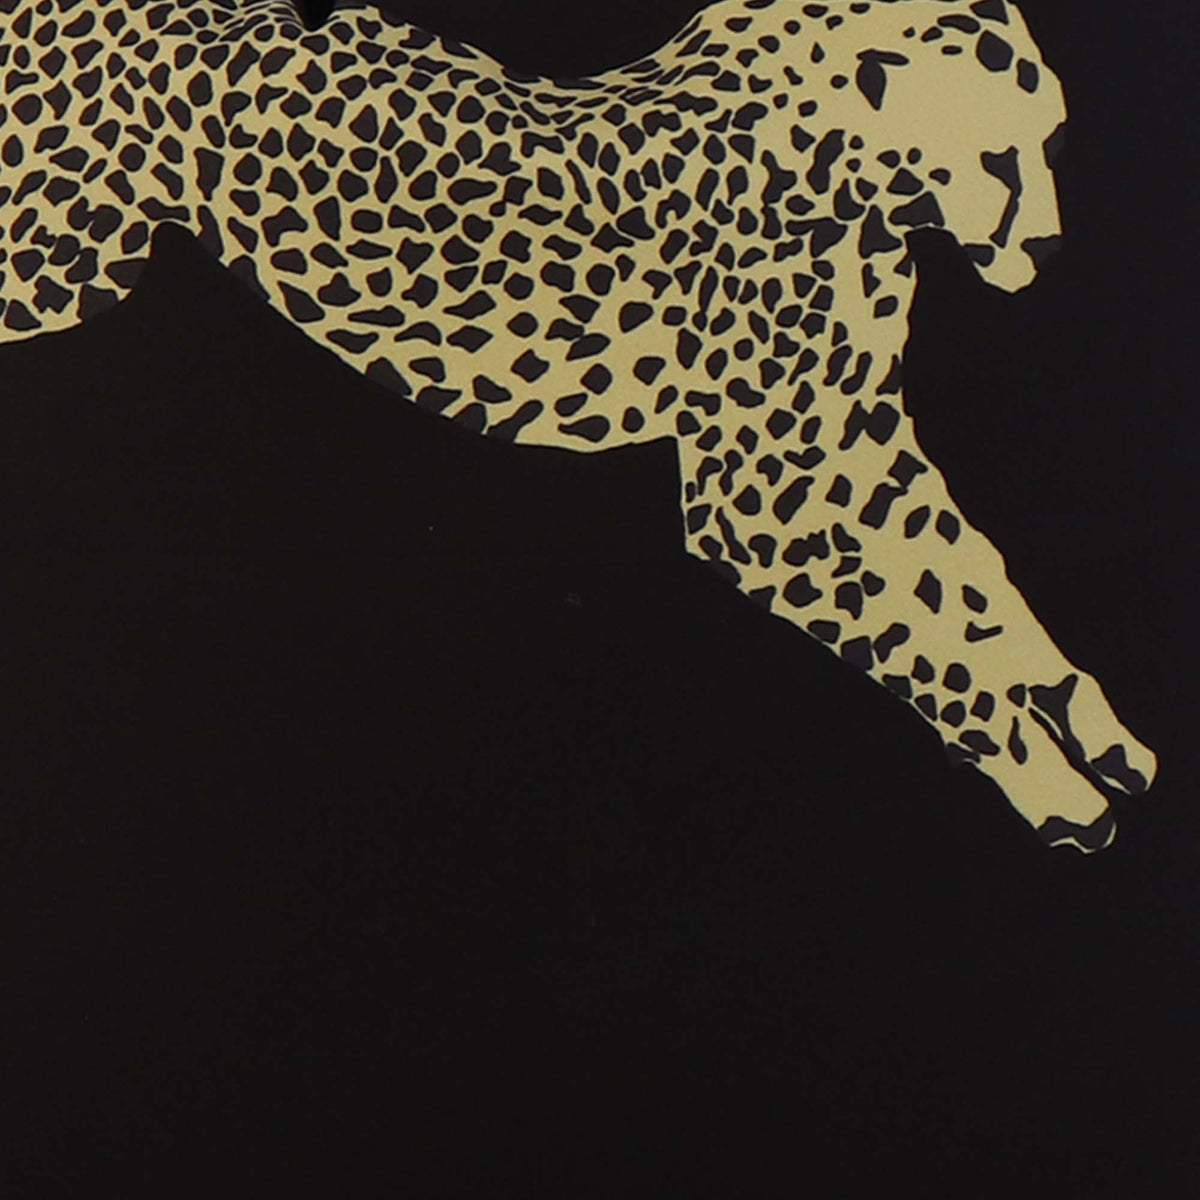 Leaping Cheetah Black Magic / 4x4 inch Fabric Swatch